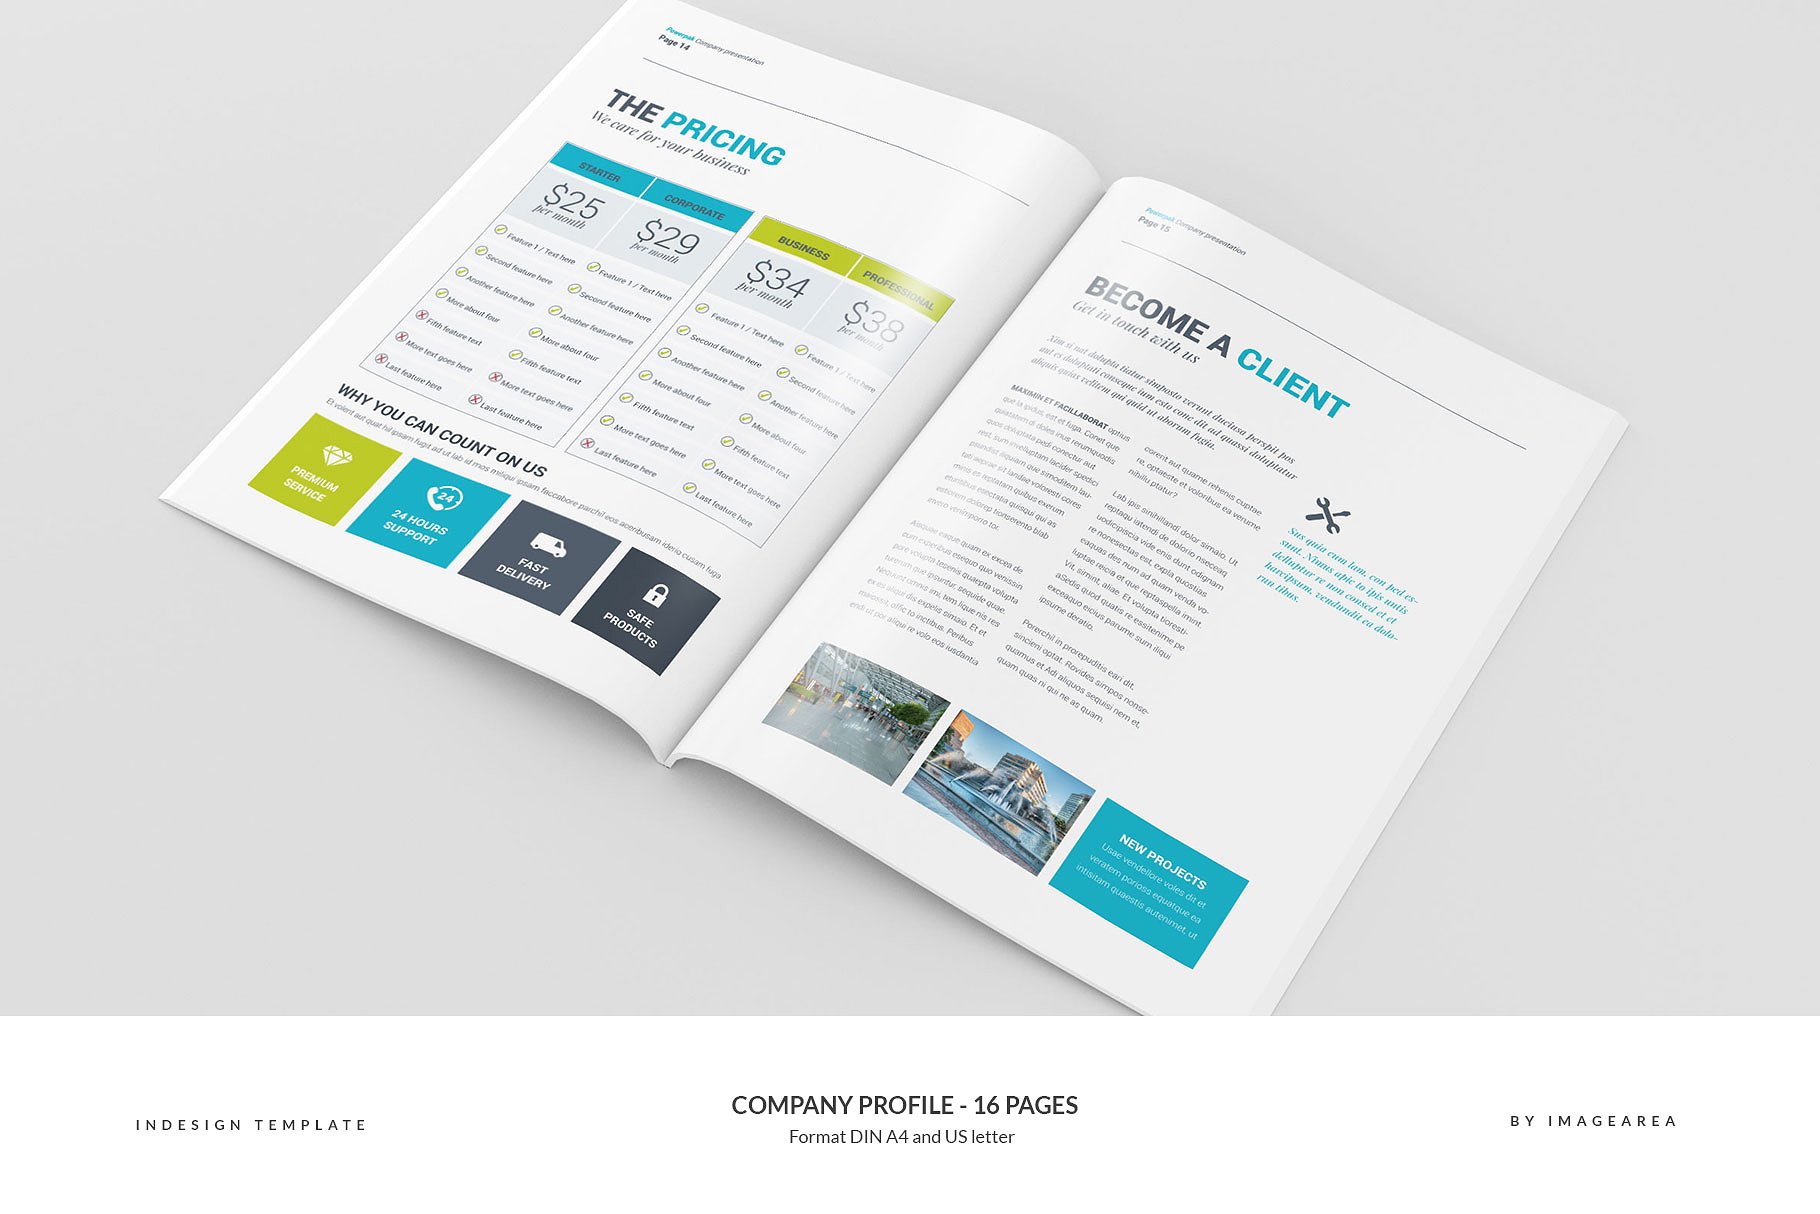 企业宣传画册设计模板 Company Profile – 16 Pages插图(8)